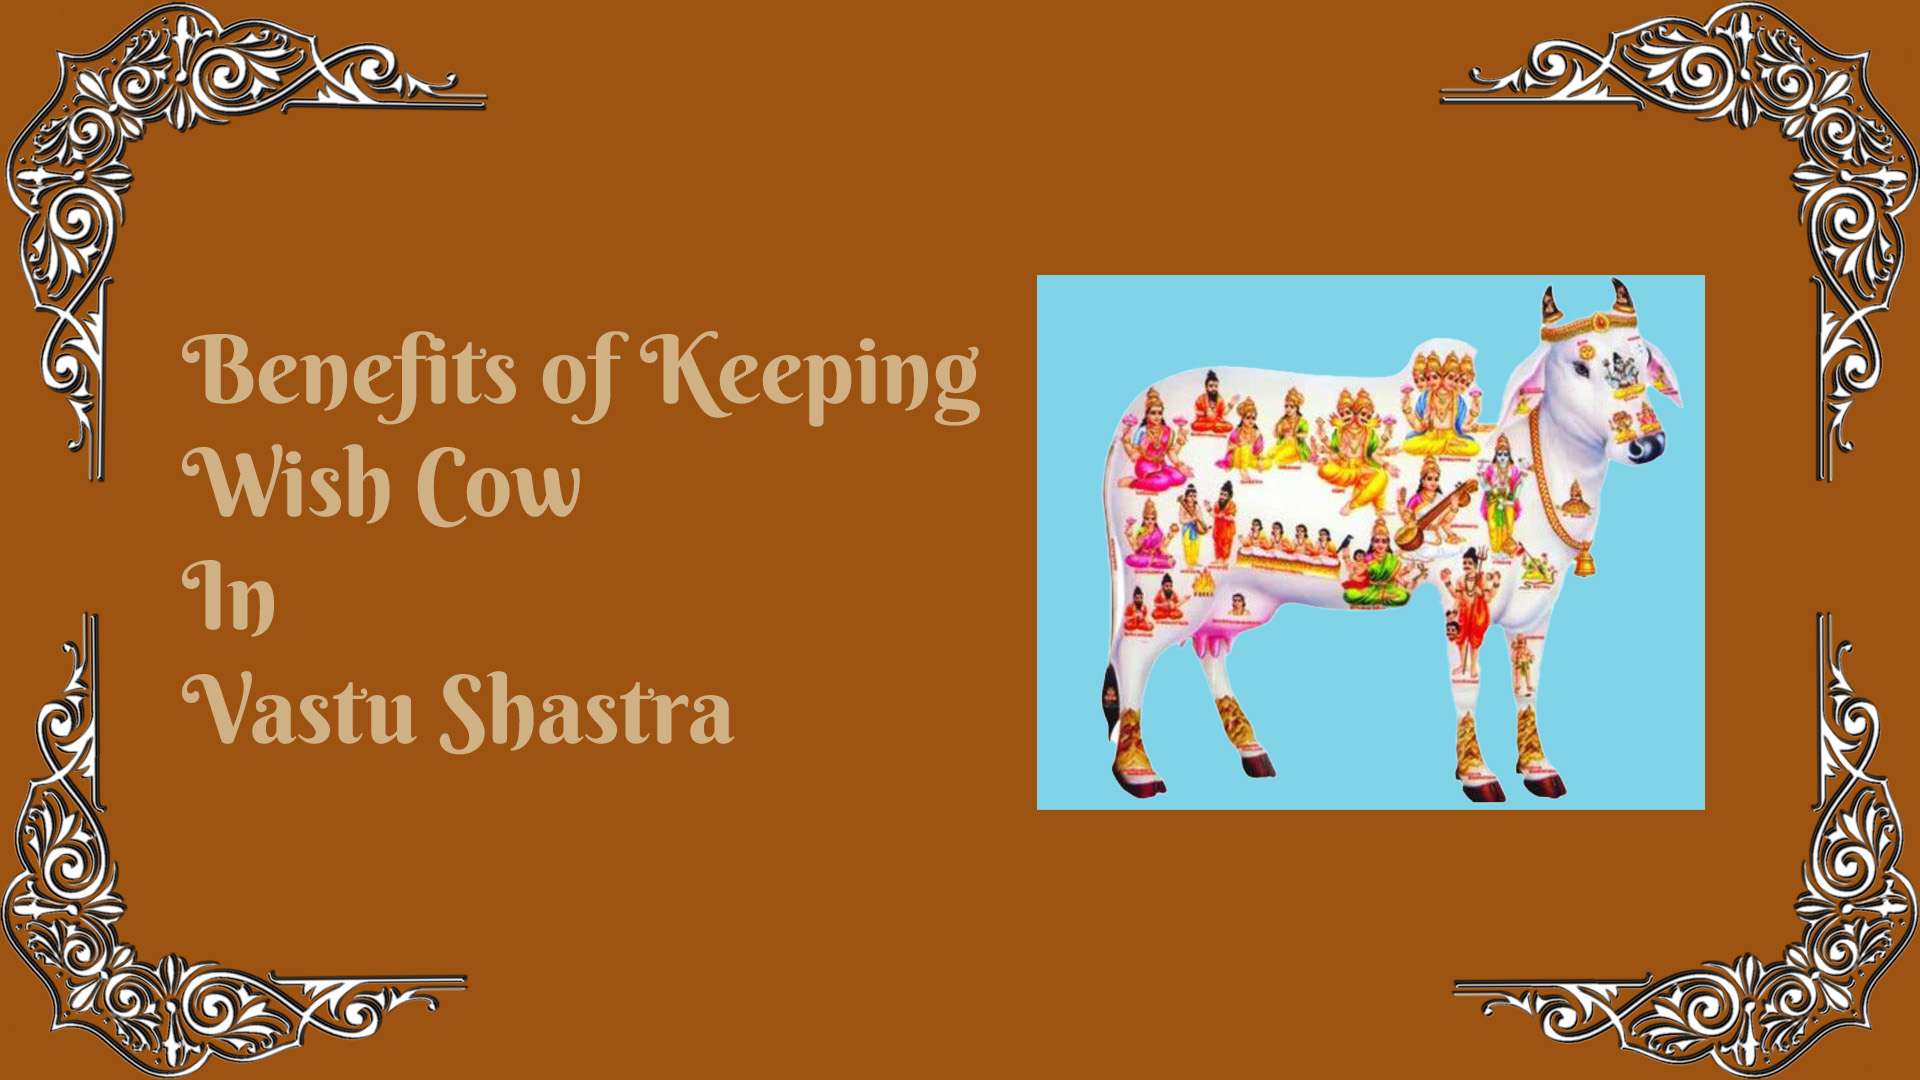 Benefits of keeping wish cow in Vastu Shastra